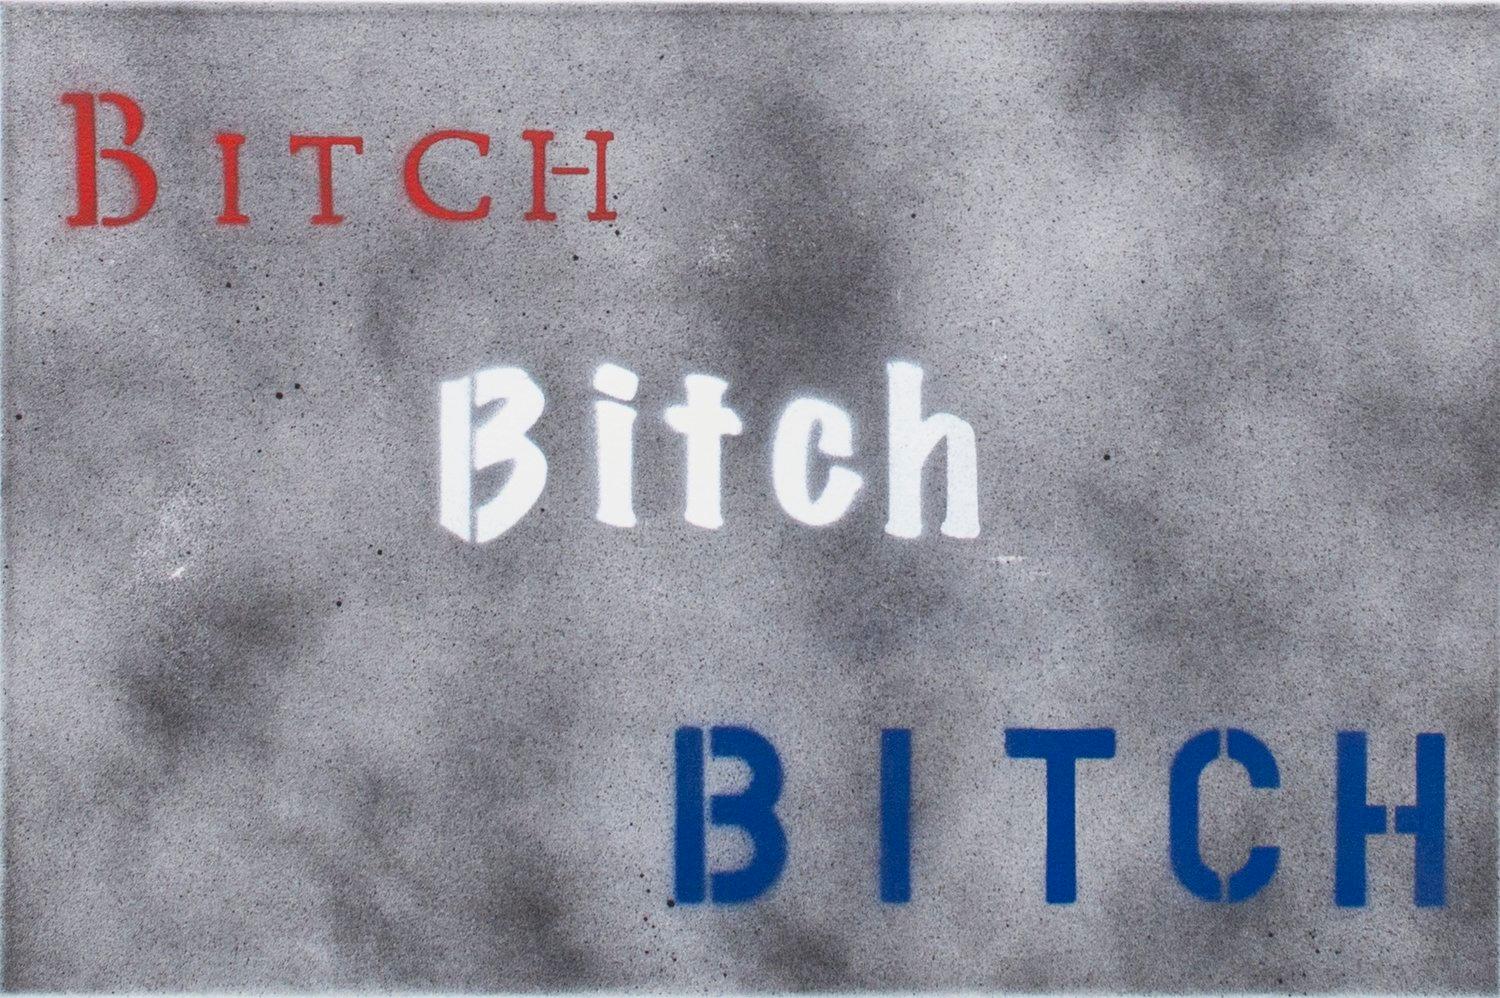 Bernie Taupin Abstract Print - Bitch Bitch Bitch